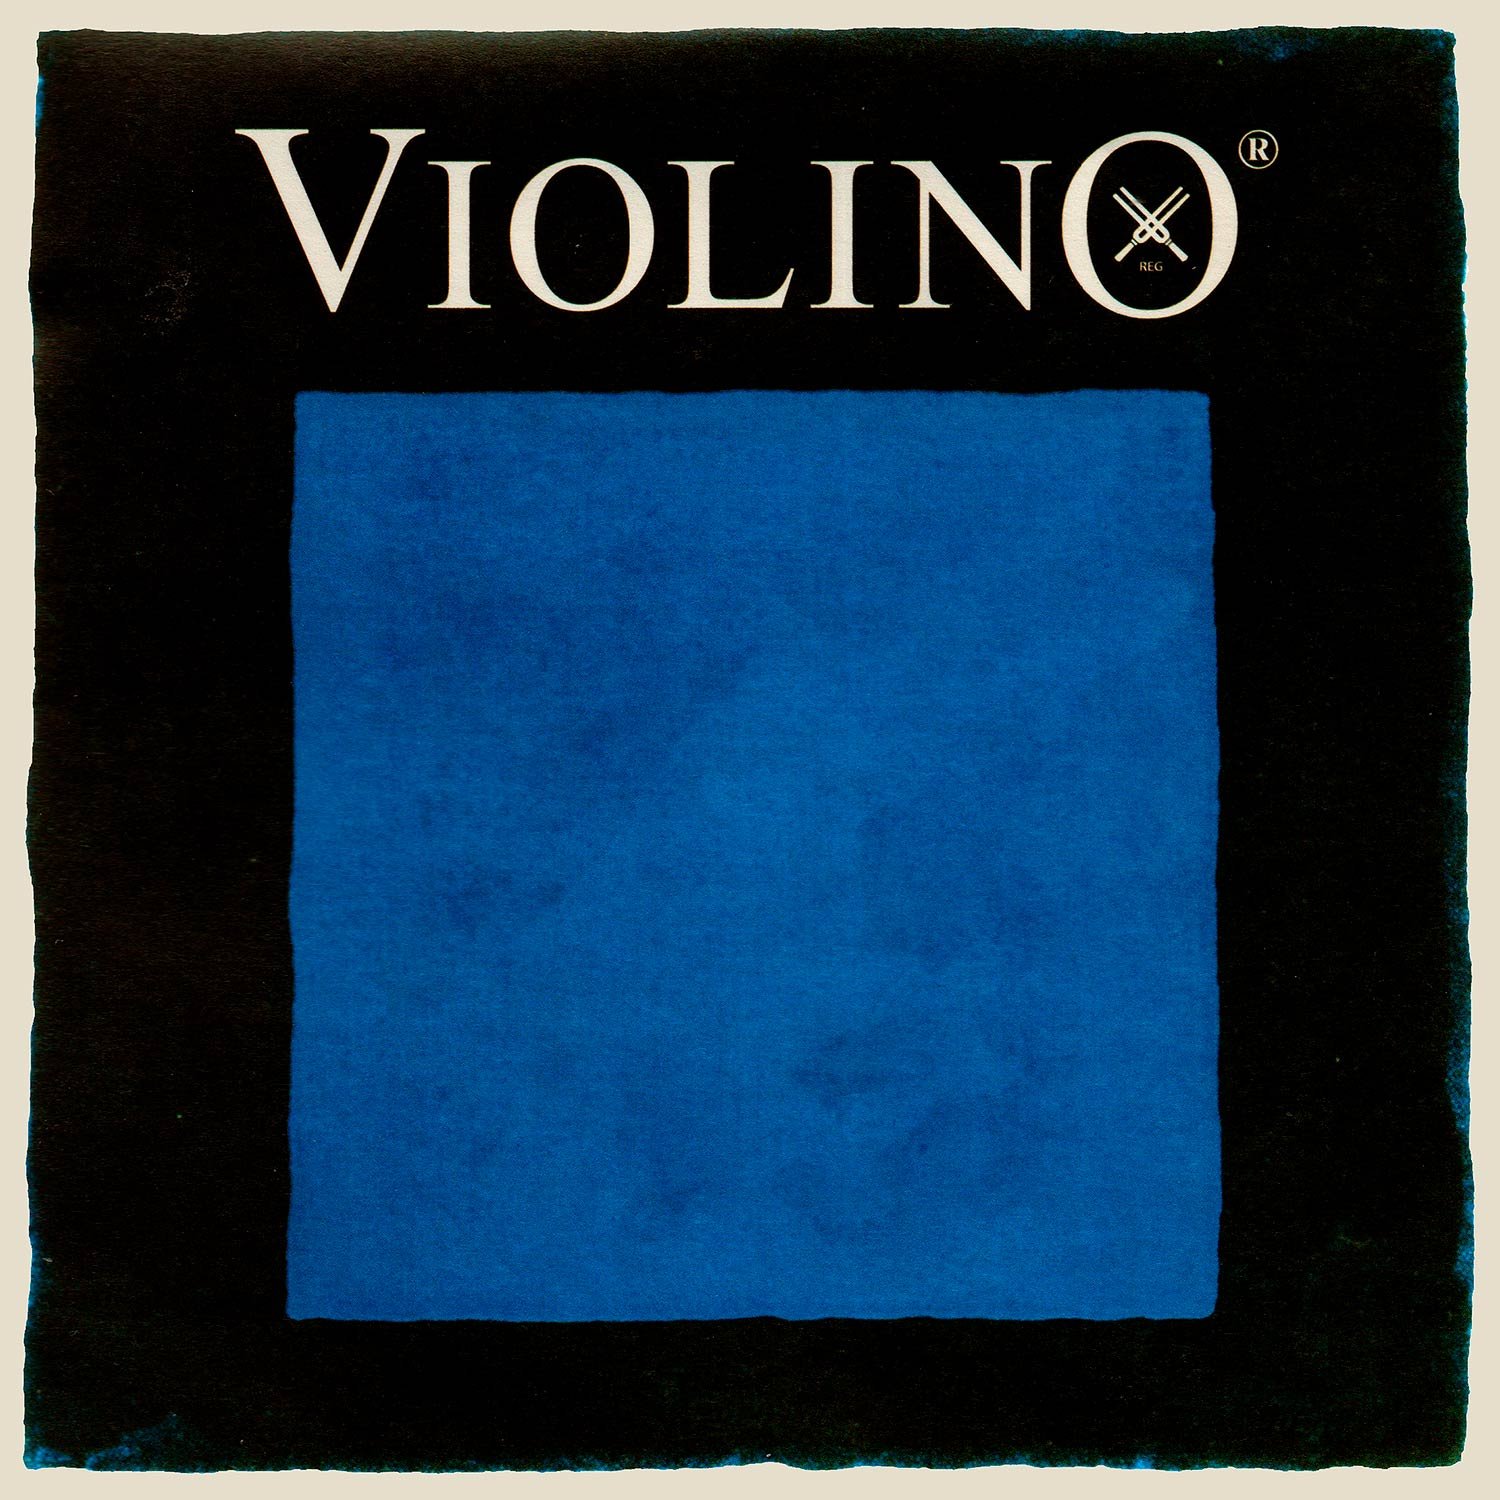 Pirastro 'Violino' single A violin string